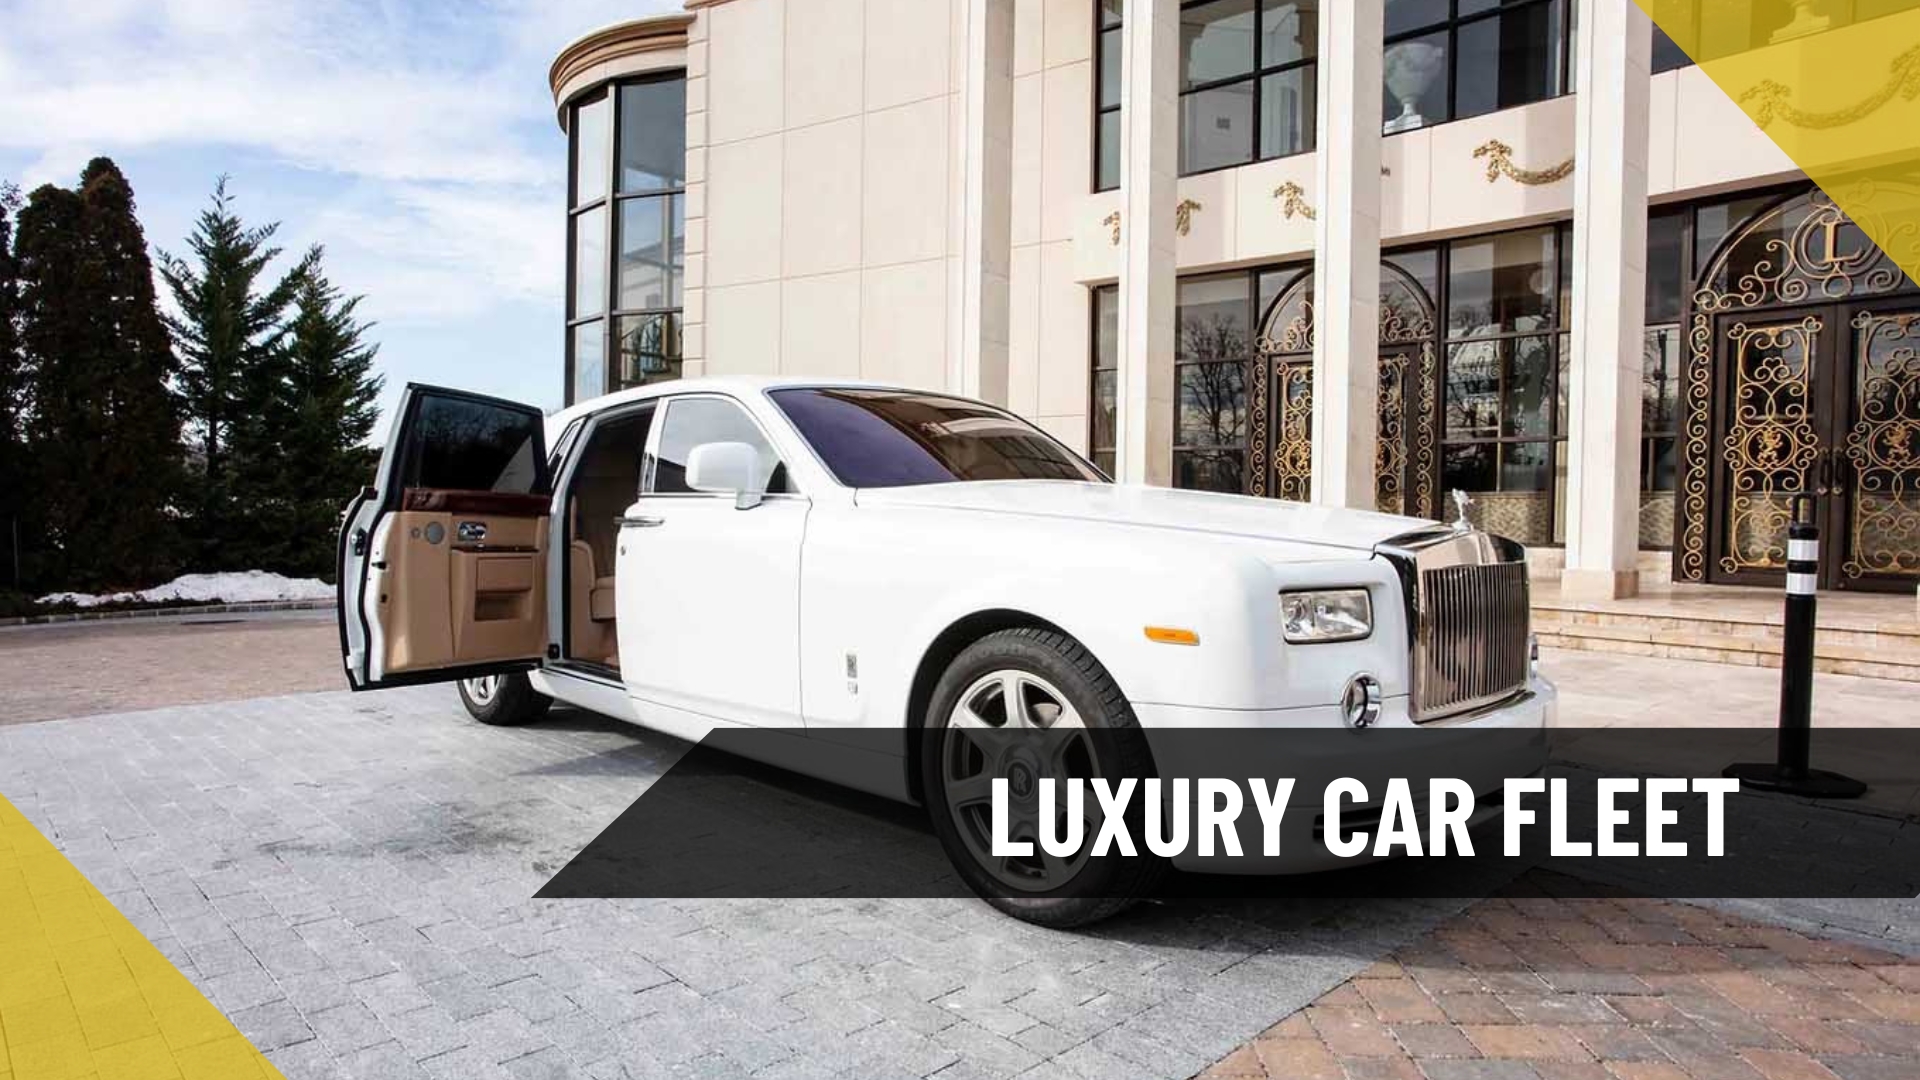 Luxury-Car-Rental